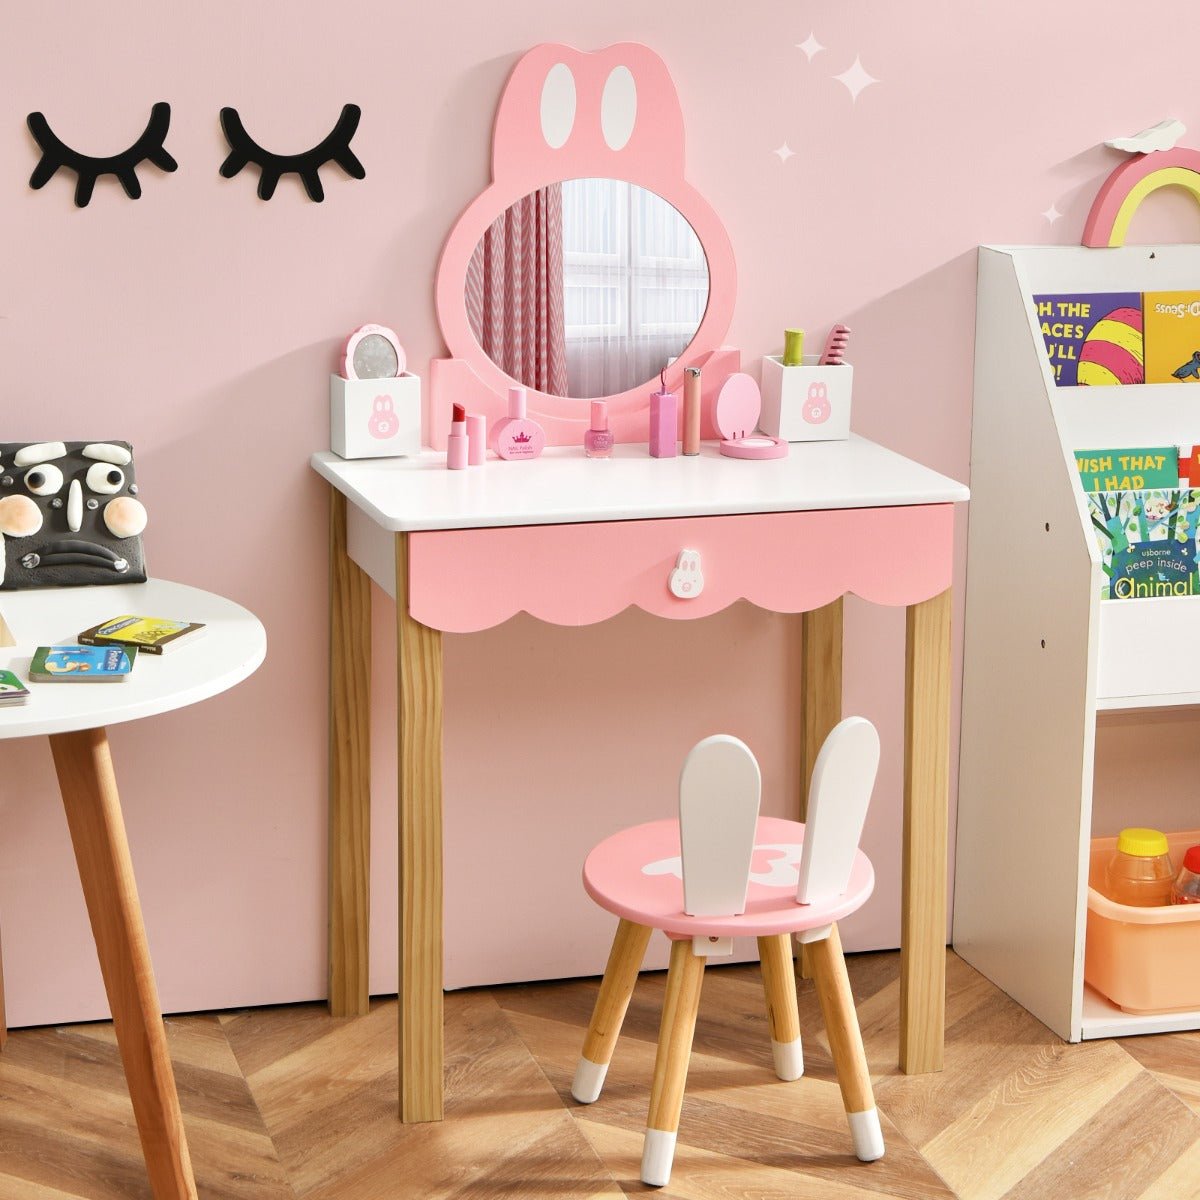 Children's Vanity Table & Chair Set with Rabbit Mirror - Charming Storage Solution